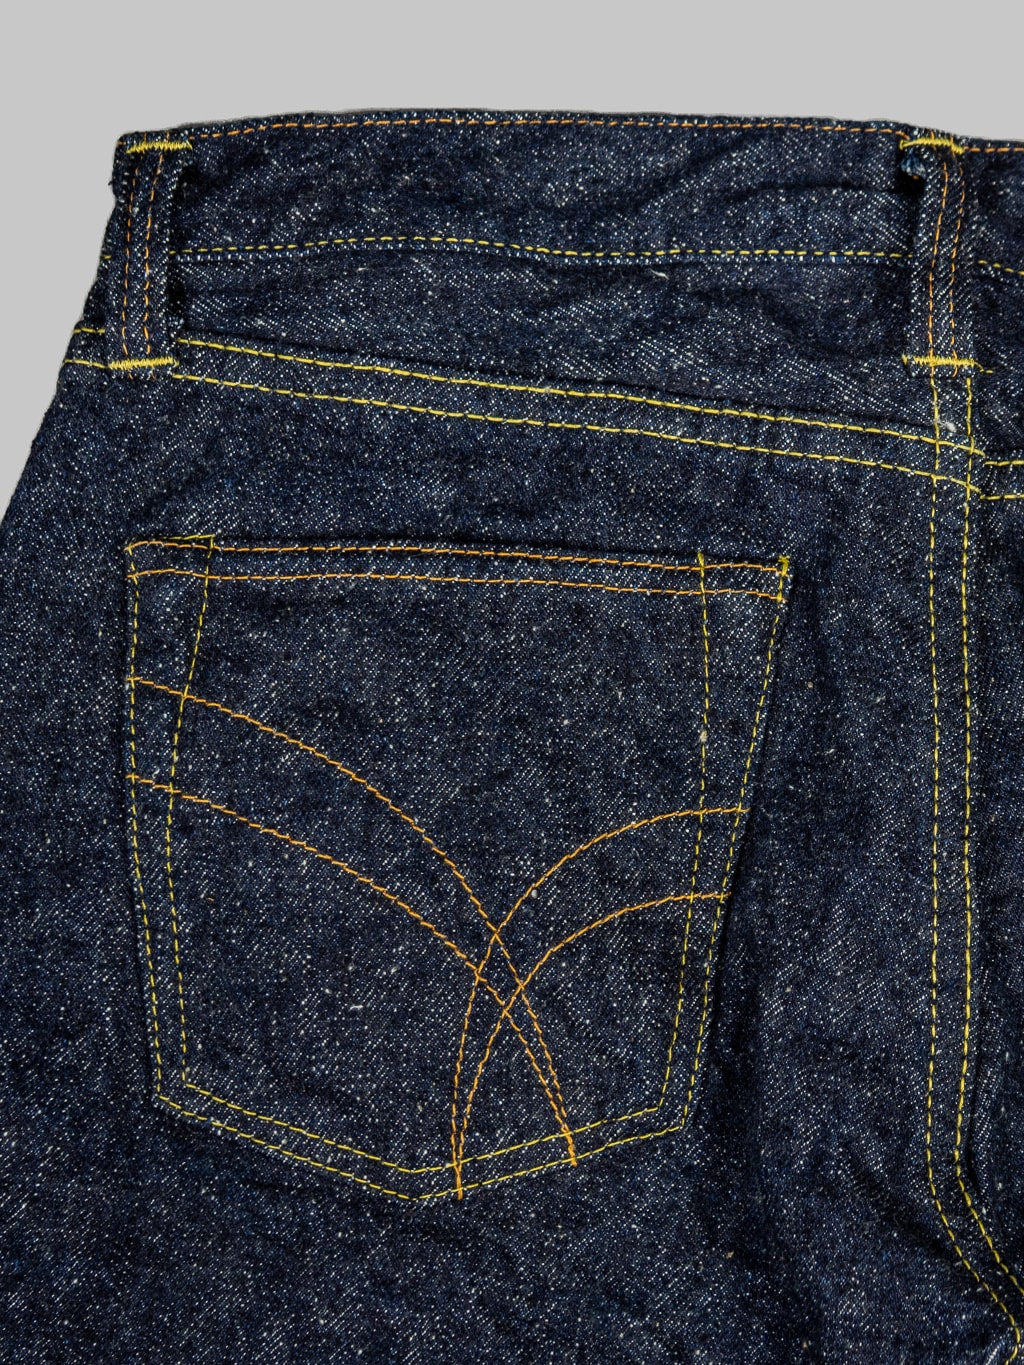 The Strike Gold Keep Earth Natural Indigo Jeans stitching pocket